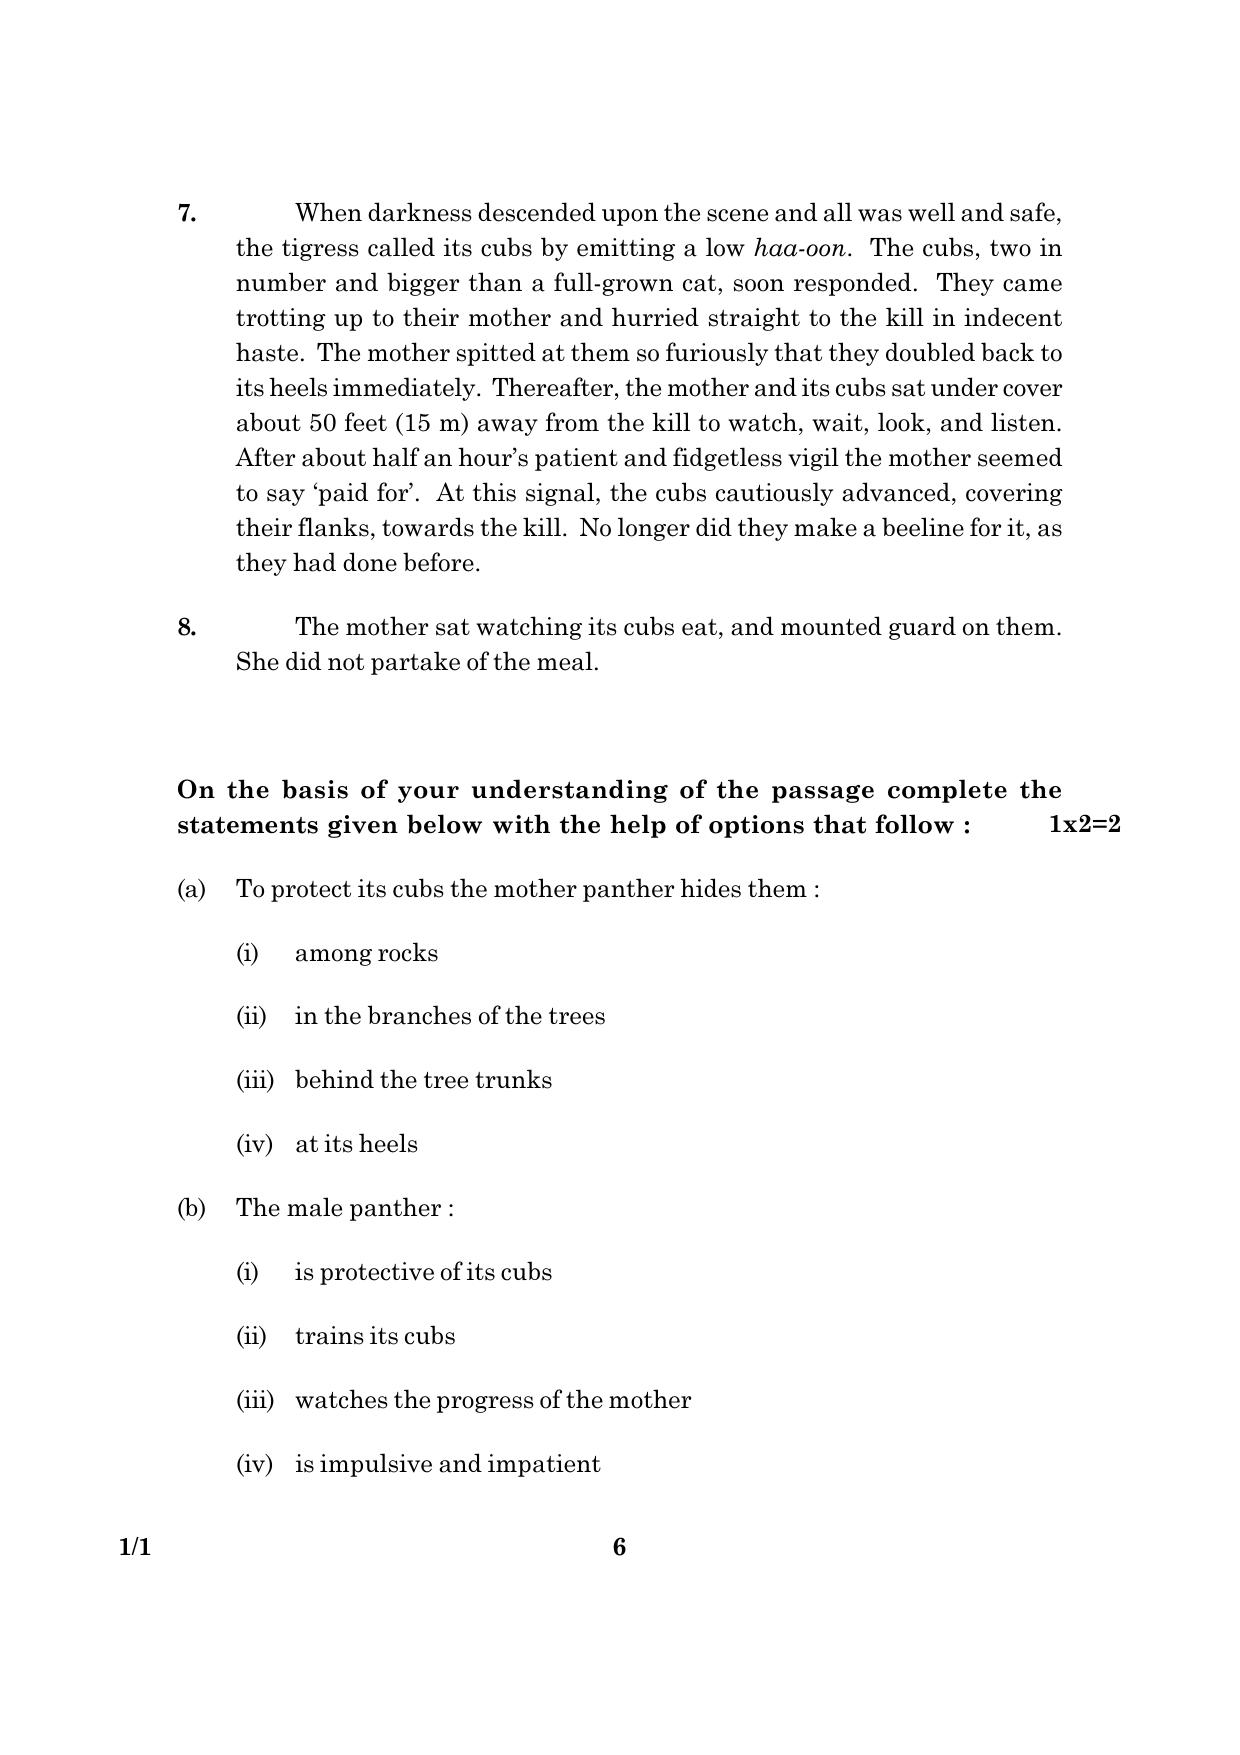 CBSE Class 12 001 Set 1 English Core 2016 Question Paper - Page 6